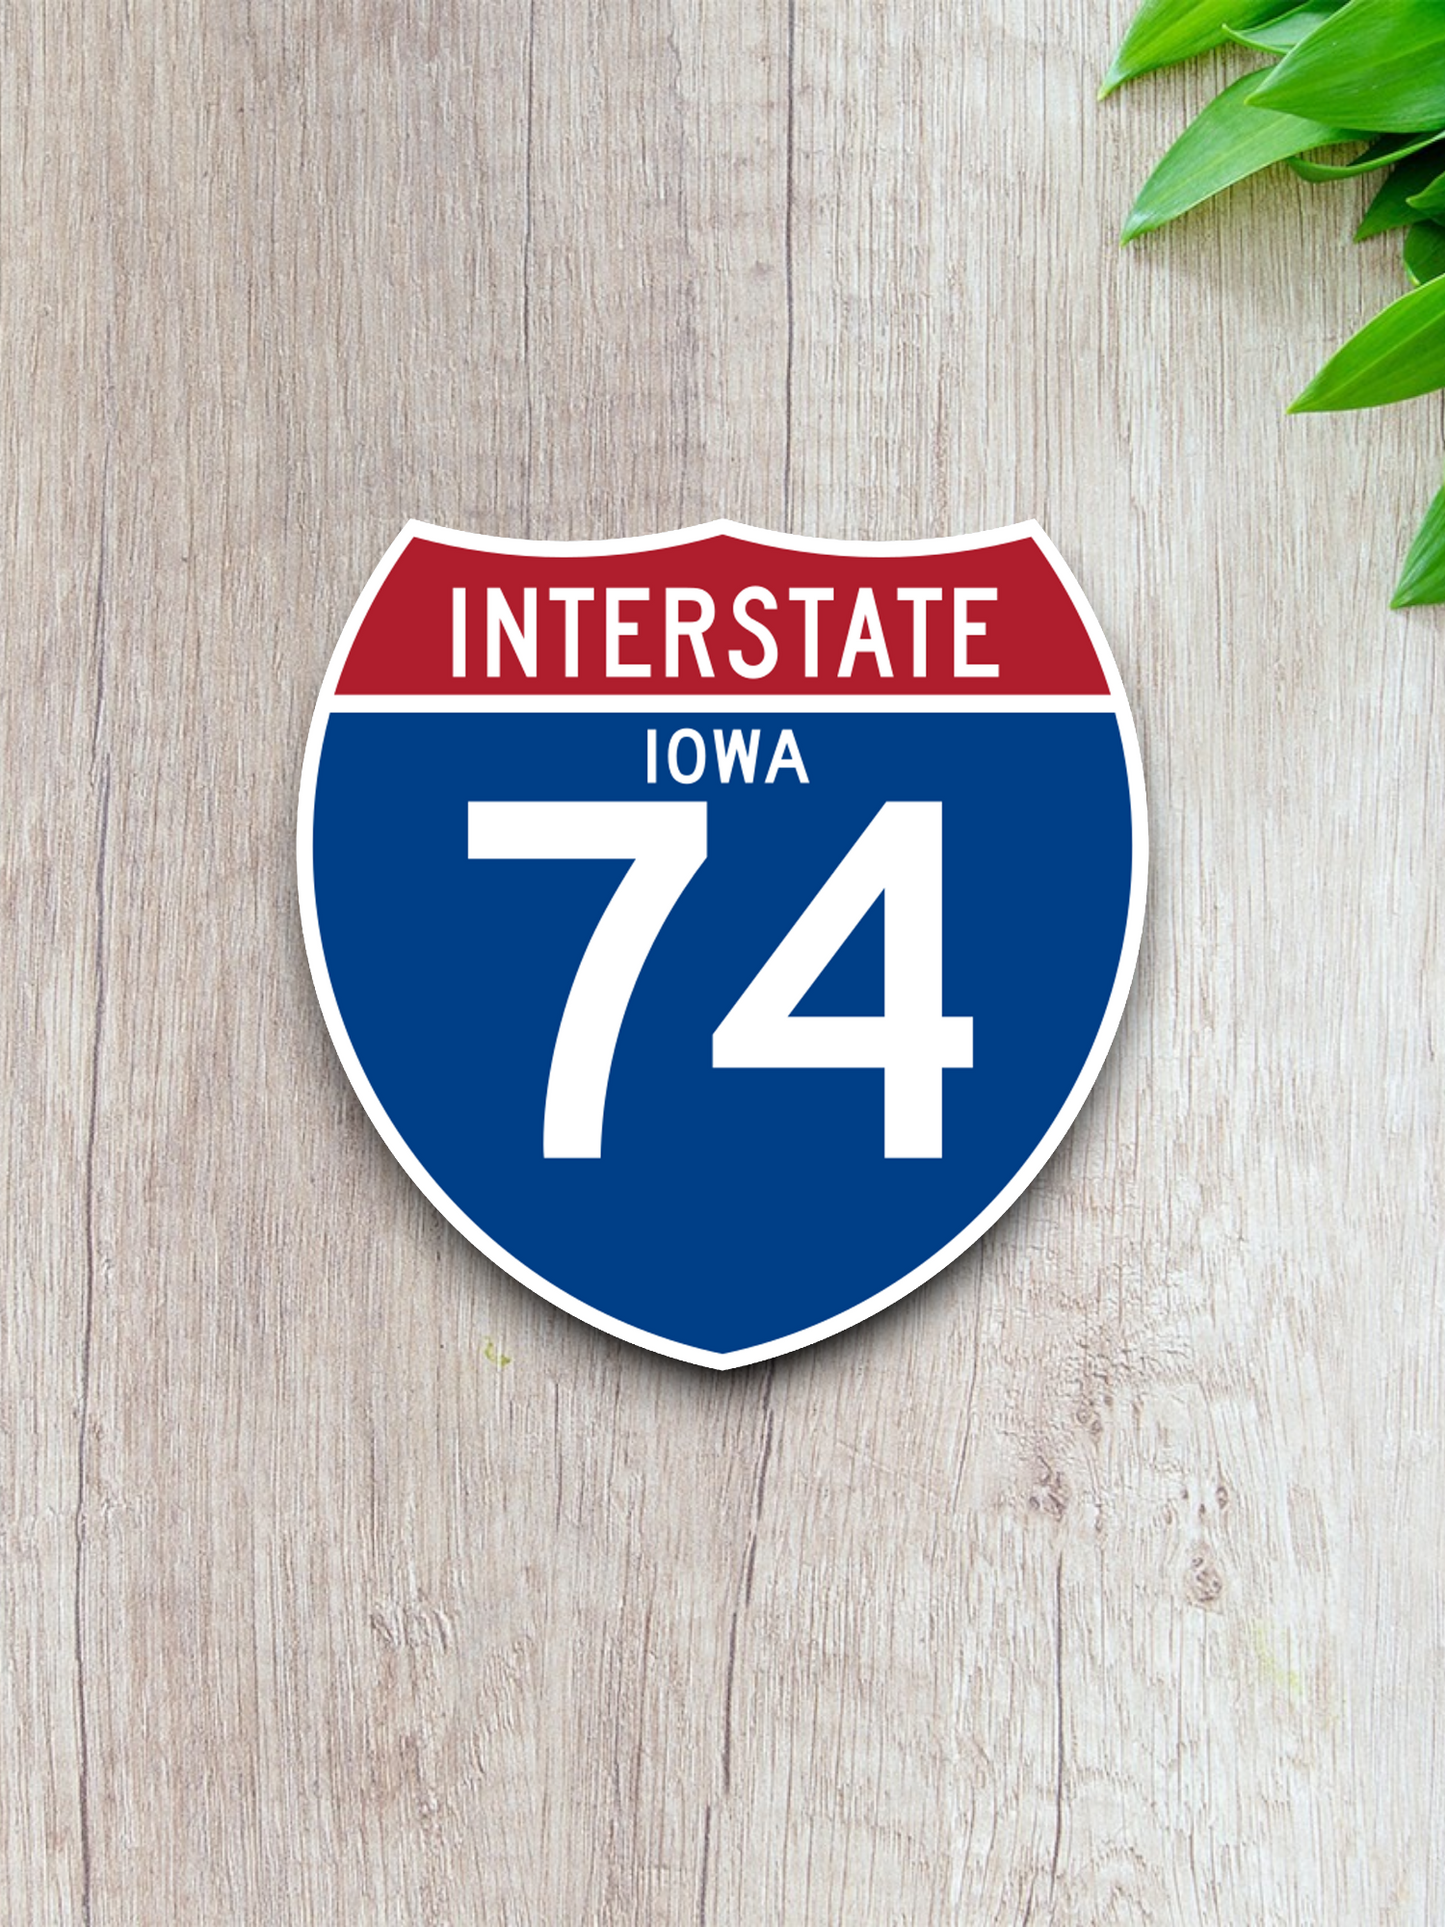 Interstate I-74 Iowa - Road Sign Sticker